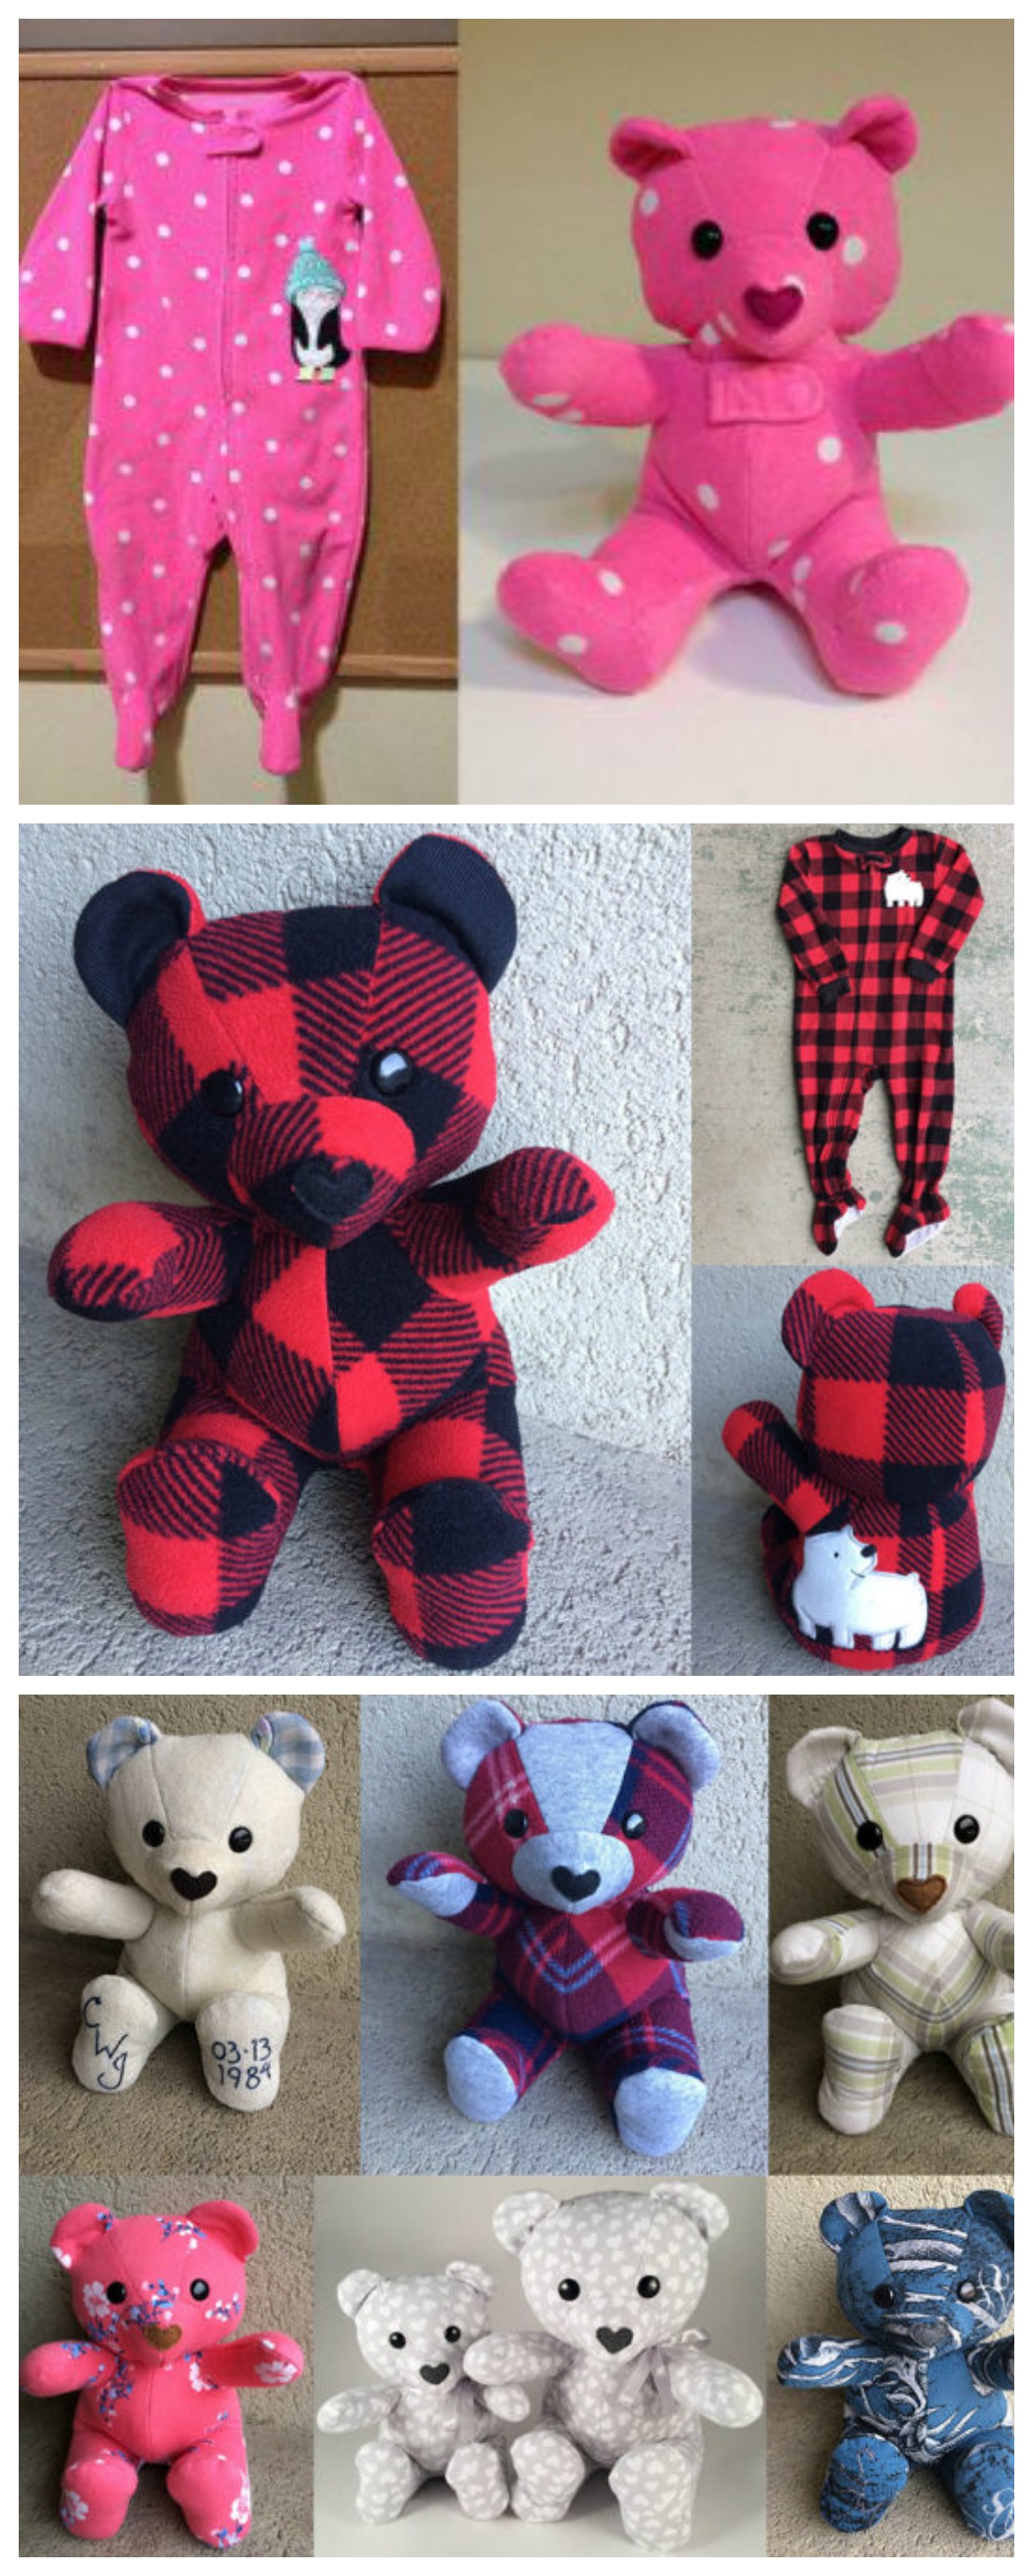  DIY Keepsake Memory Teddy Bear from Outgrown Baby Clothes